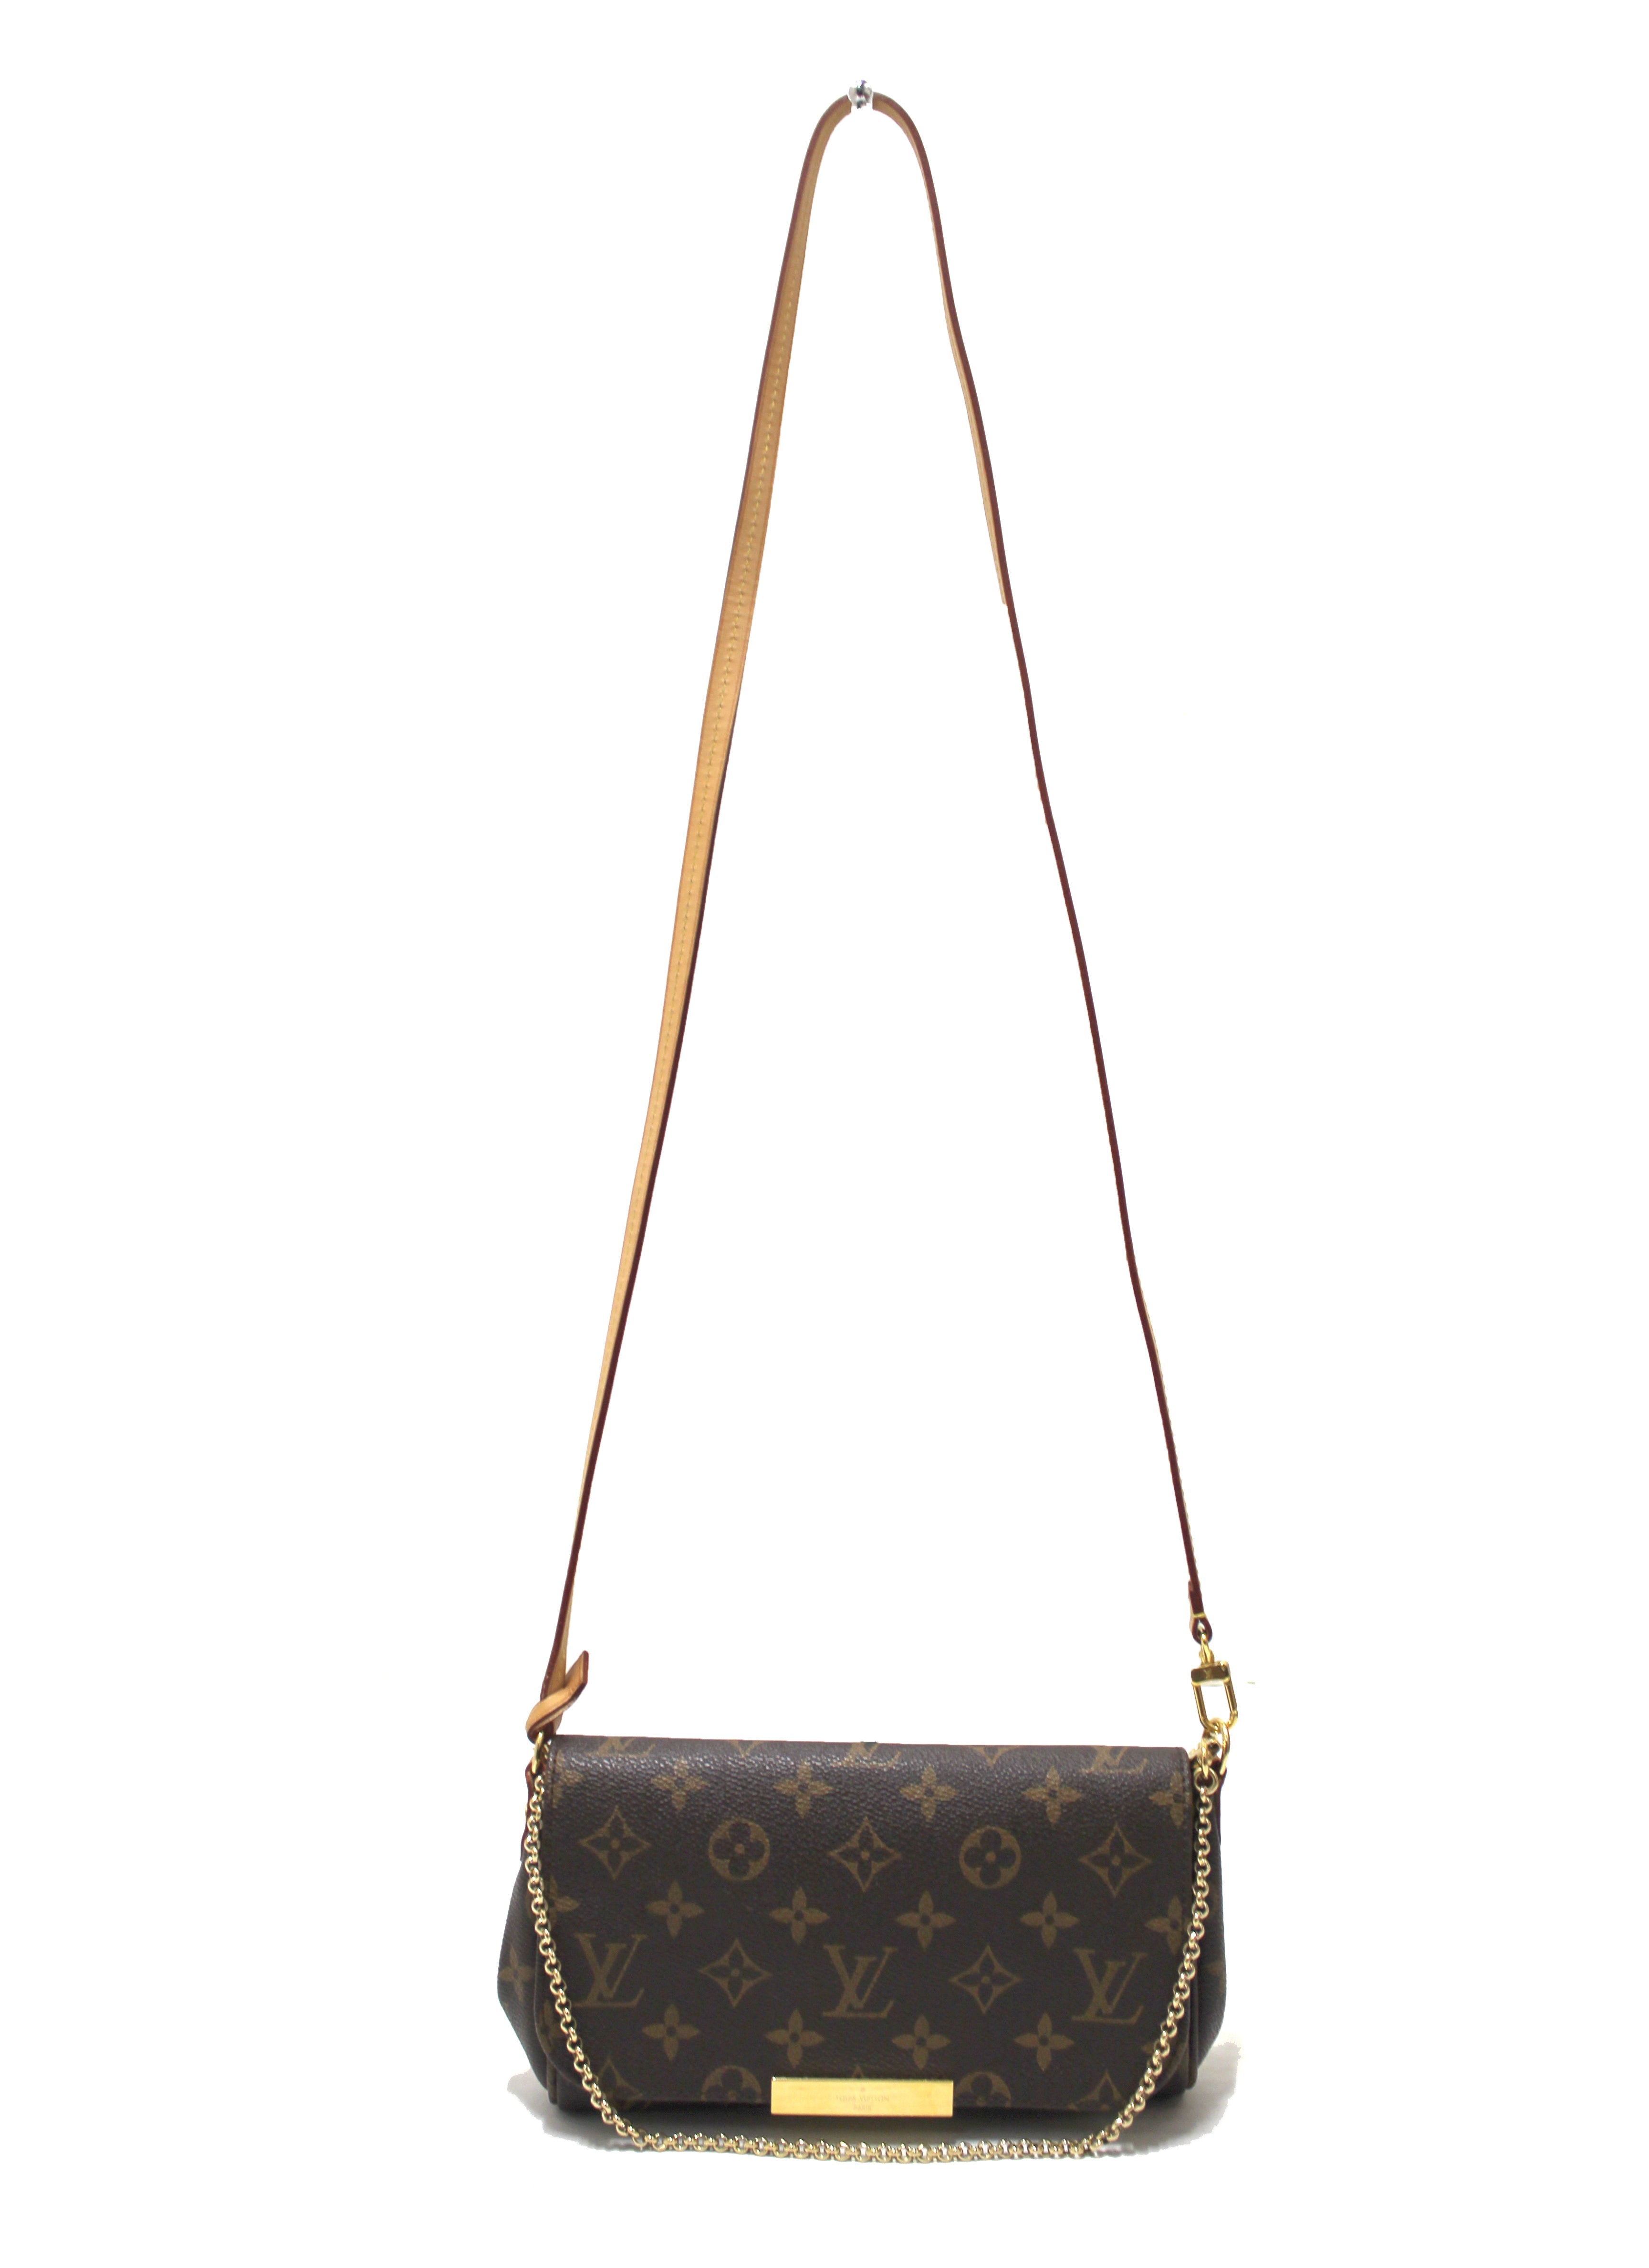 Louis Vuitton Messenger PM in Monogram Handbag - Authentic Pre-Owned Designer Handbags